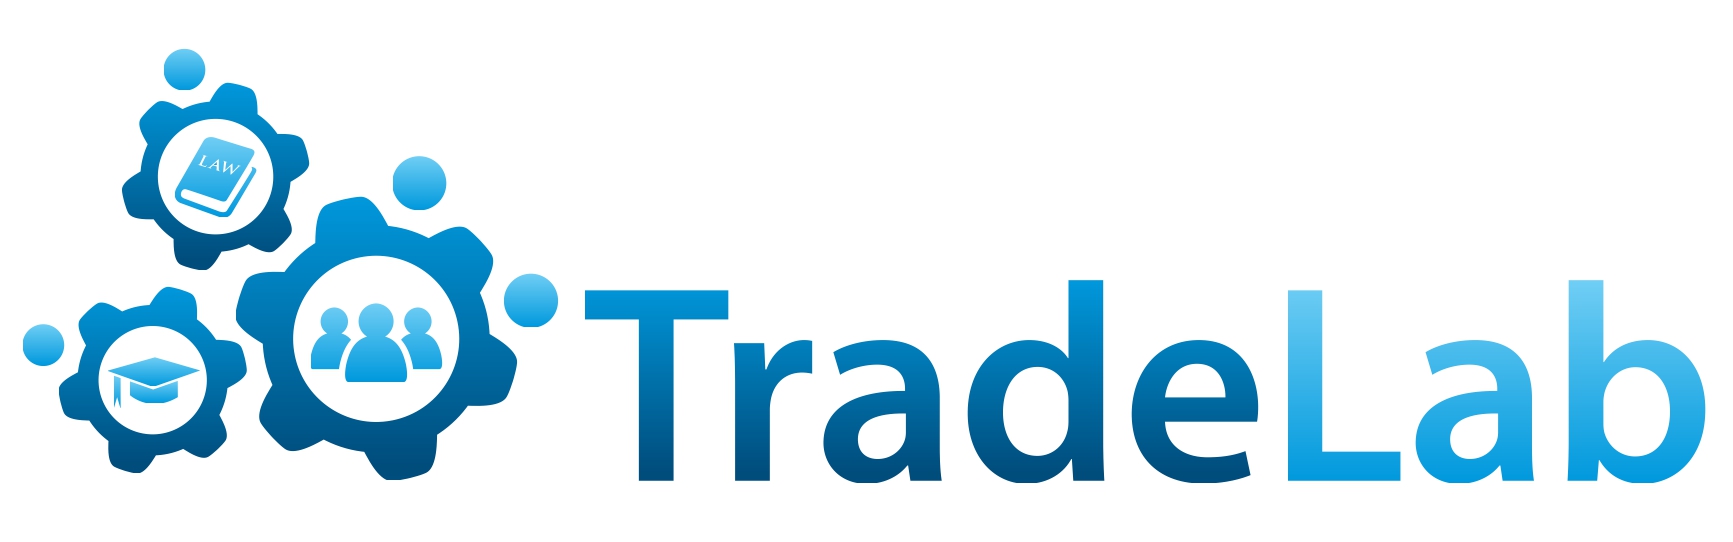 trade lab logo